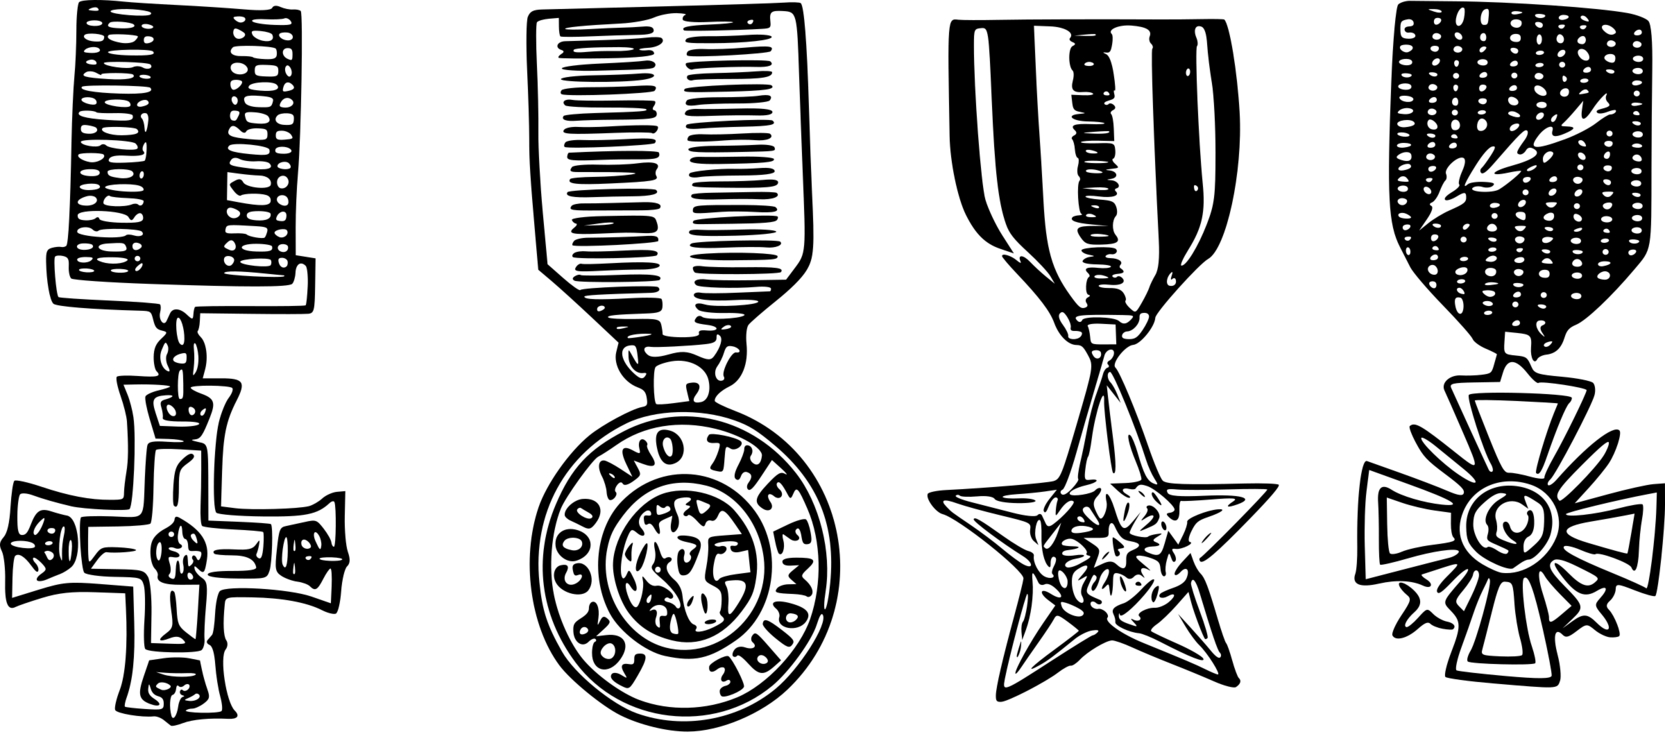 Symbol,Monochrome,Line